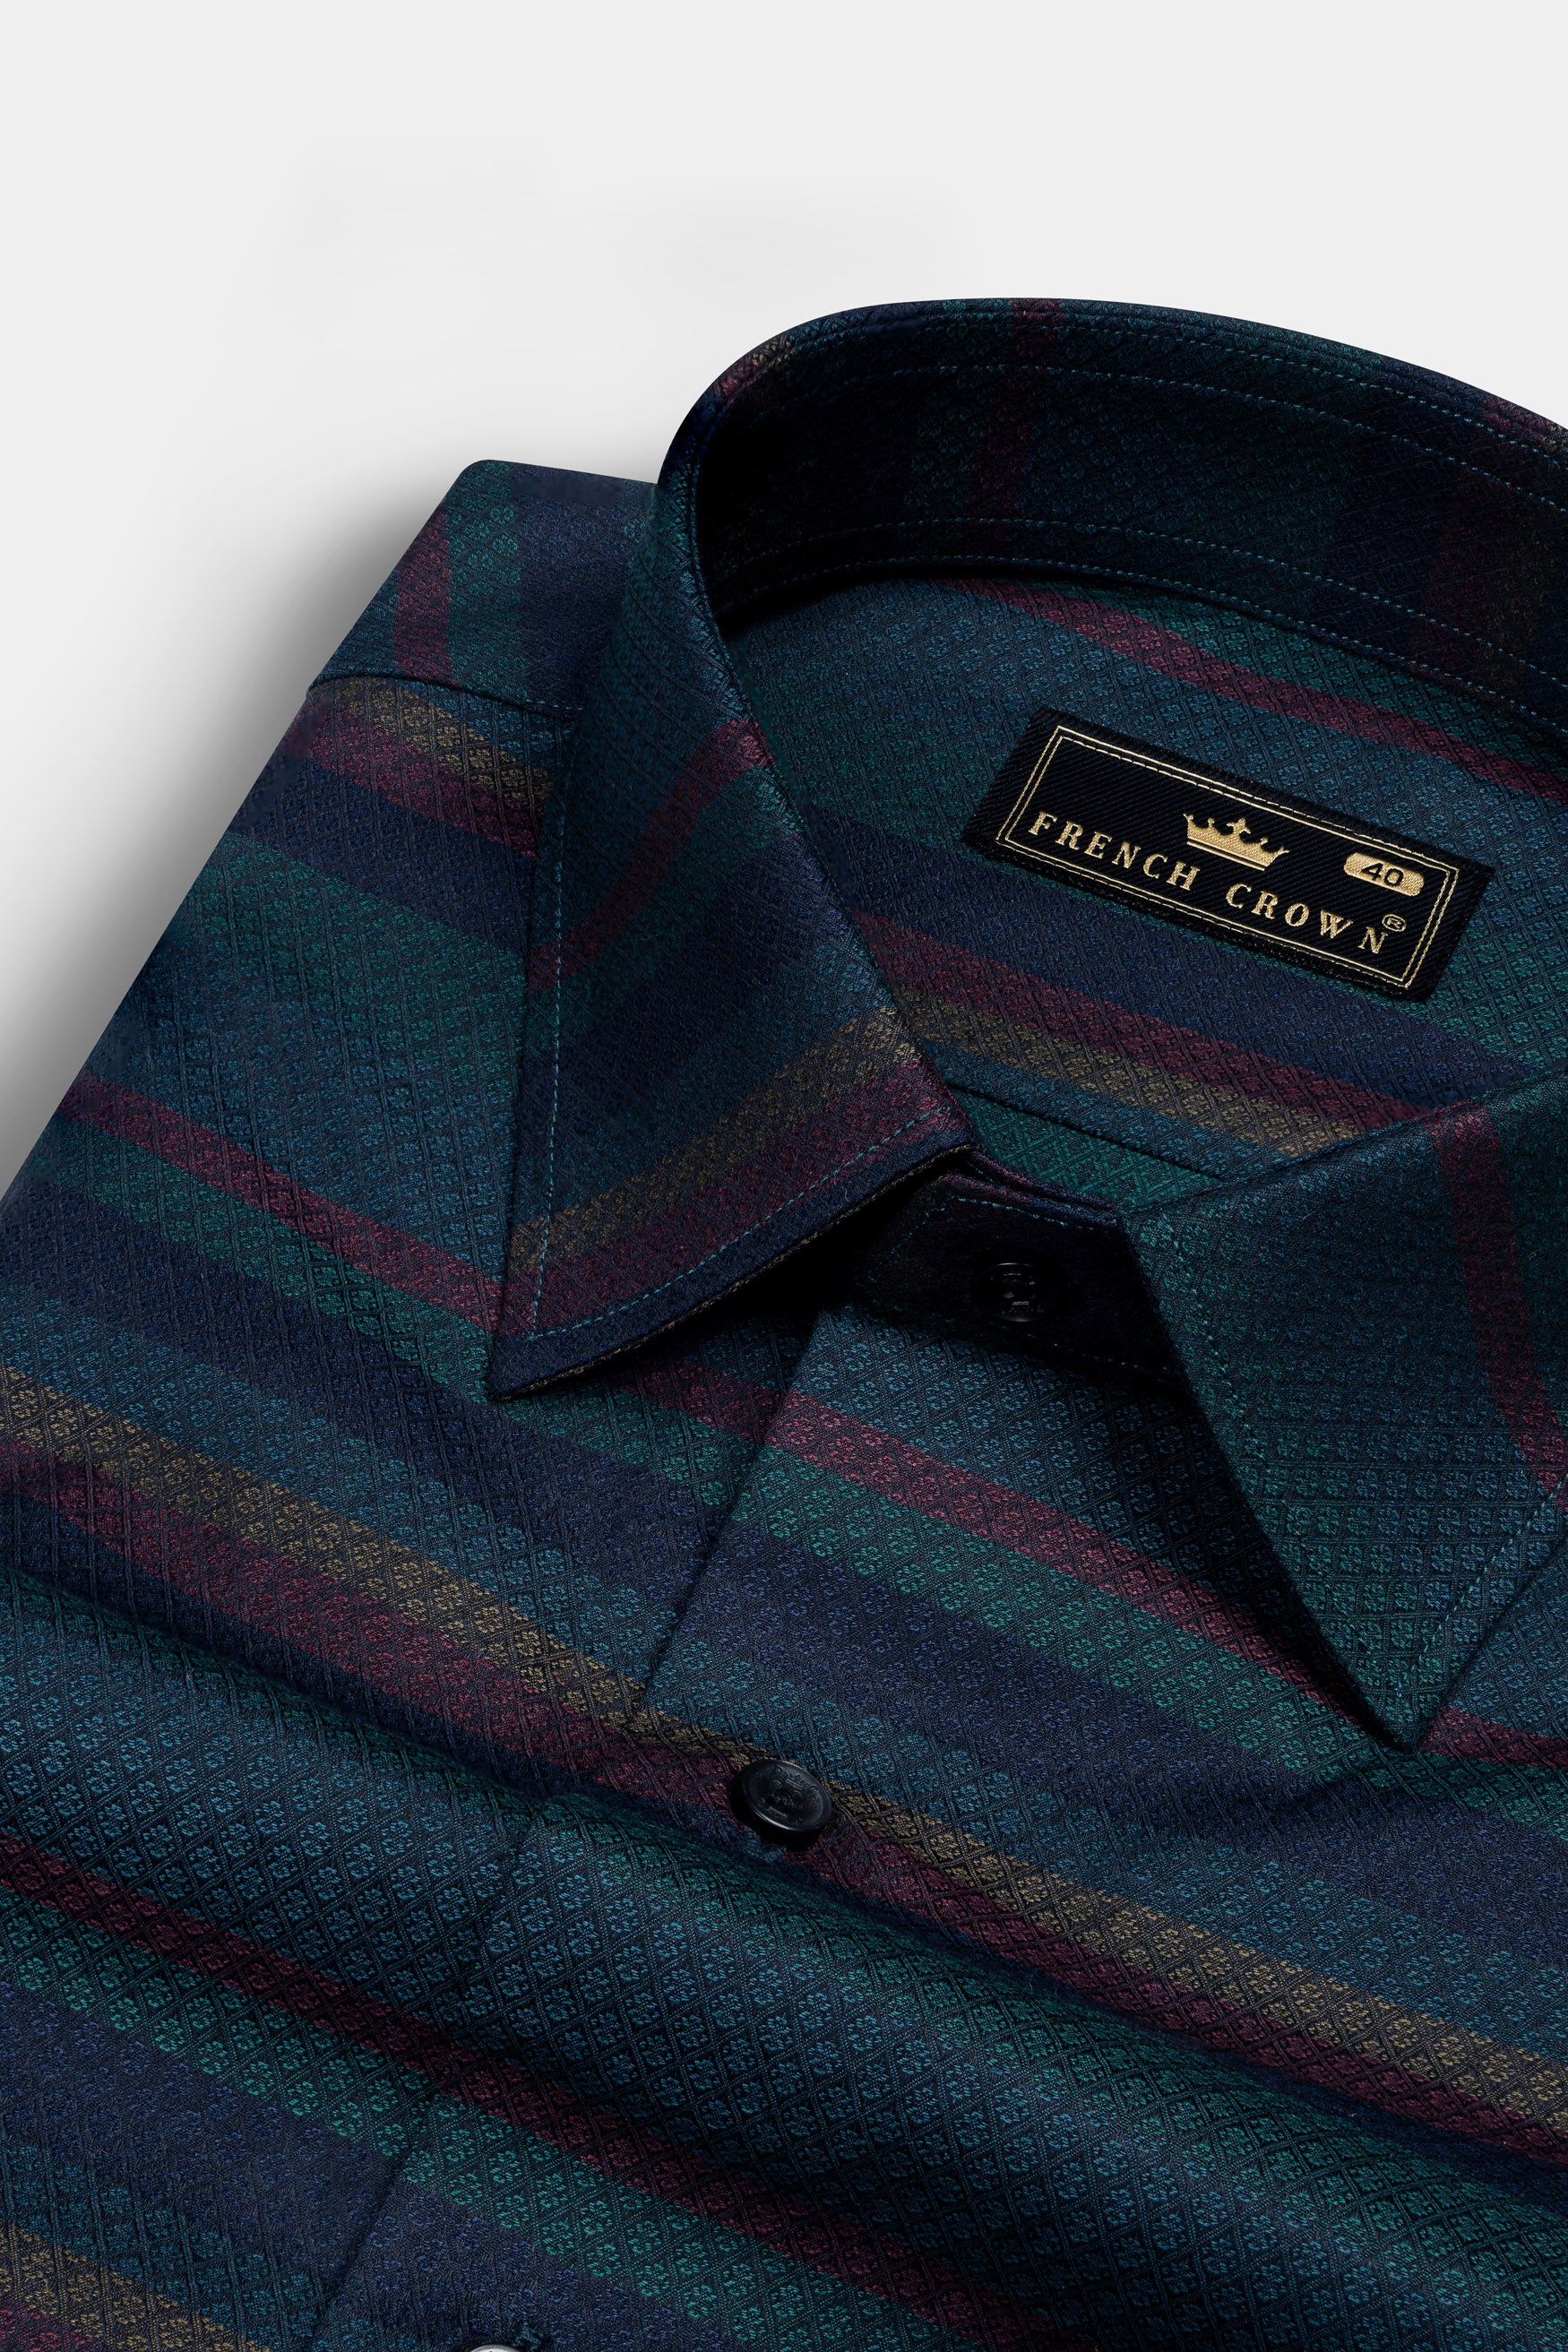 Tiber Blue And Eclipse Maroon Jacquard Textured Premium Giza Cotton Shirt